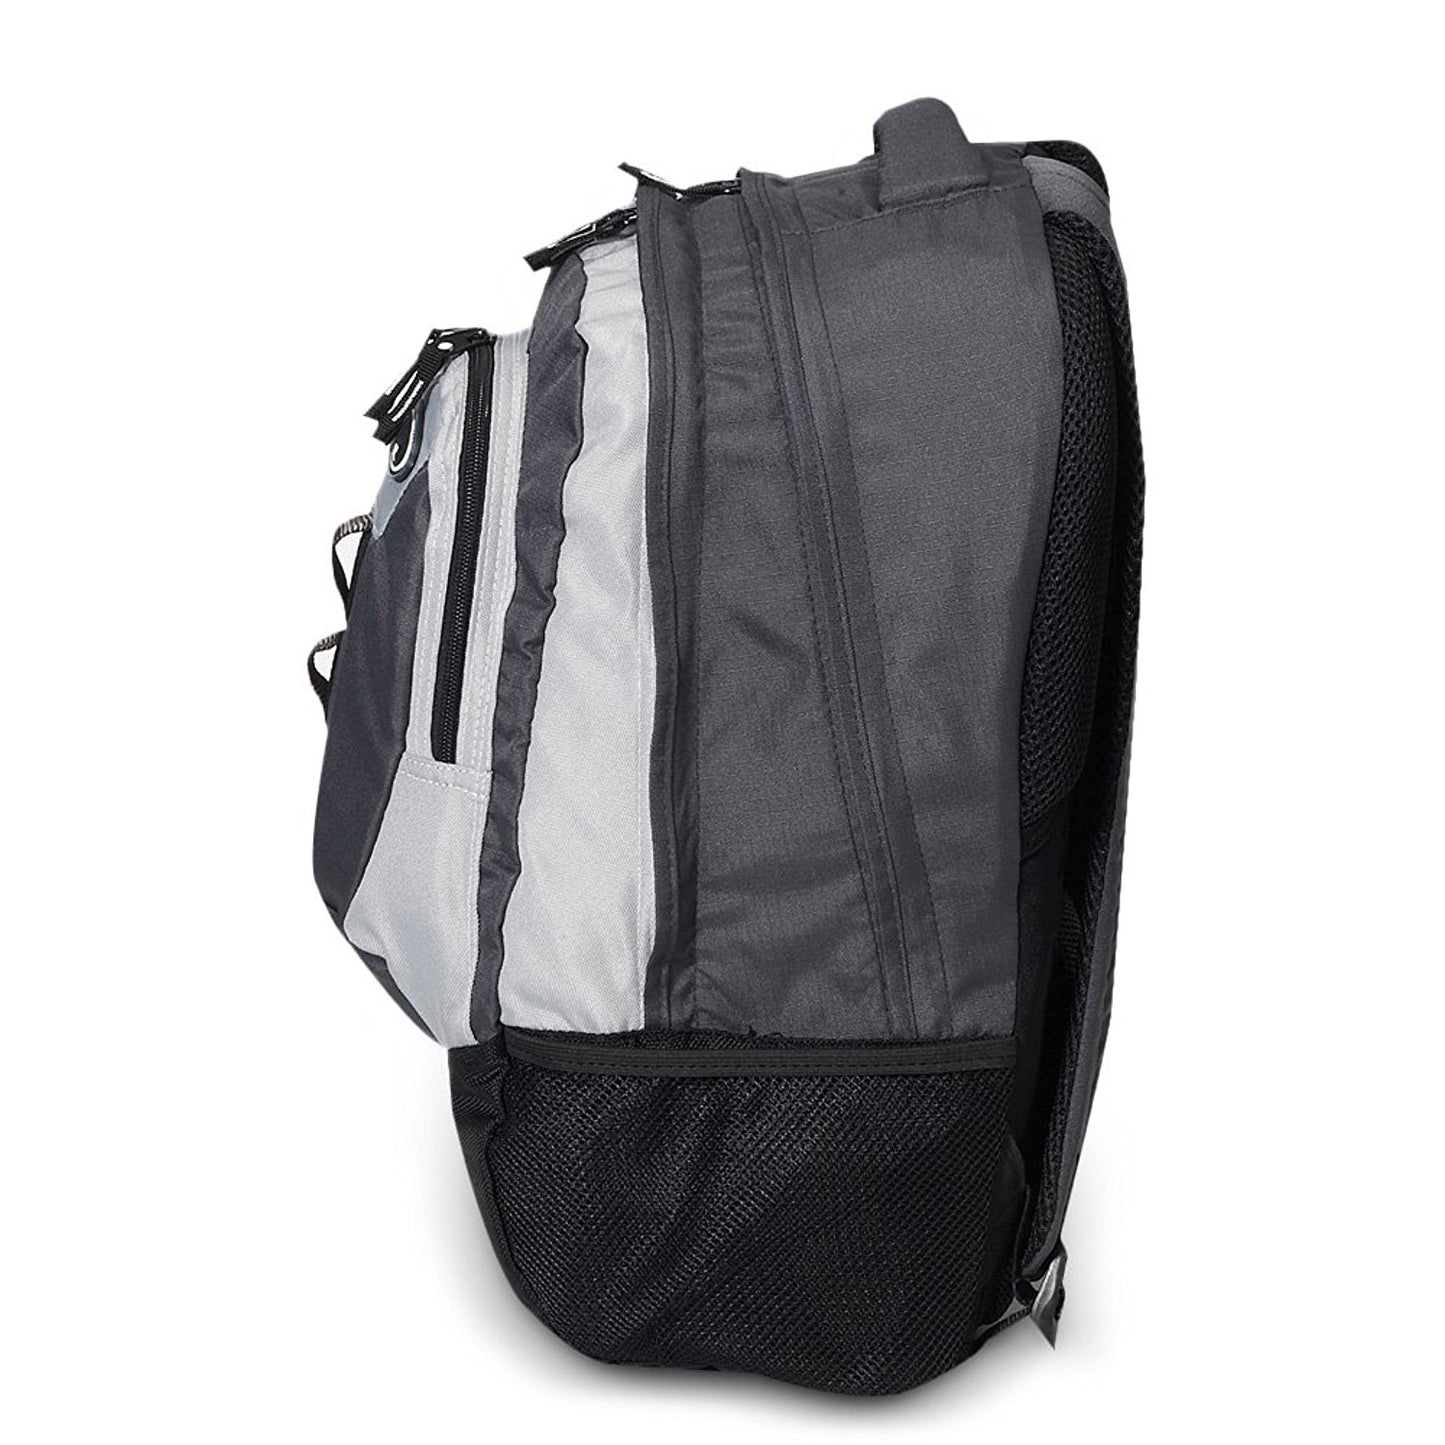 Everest Deluxe Backpack Book Bag